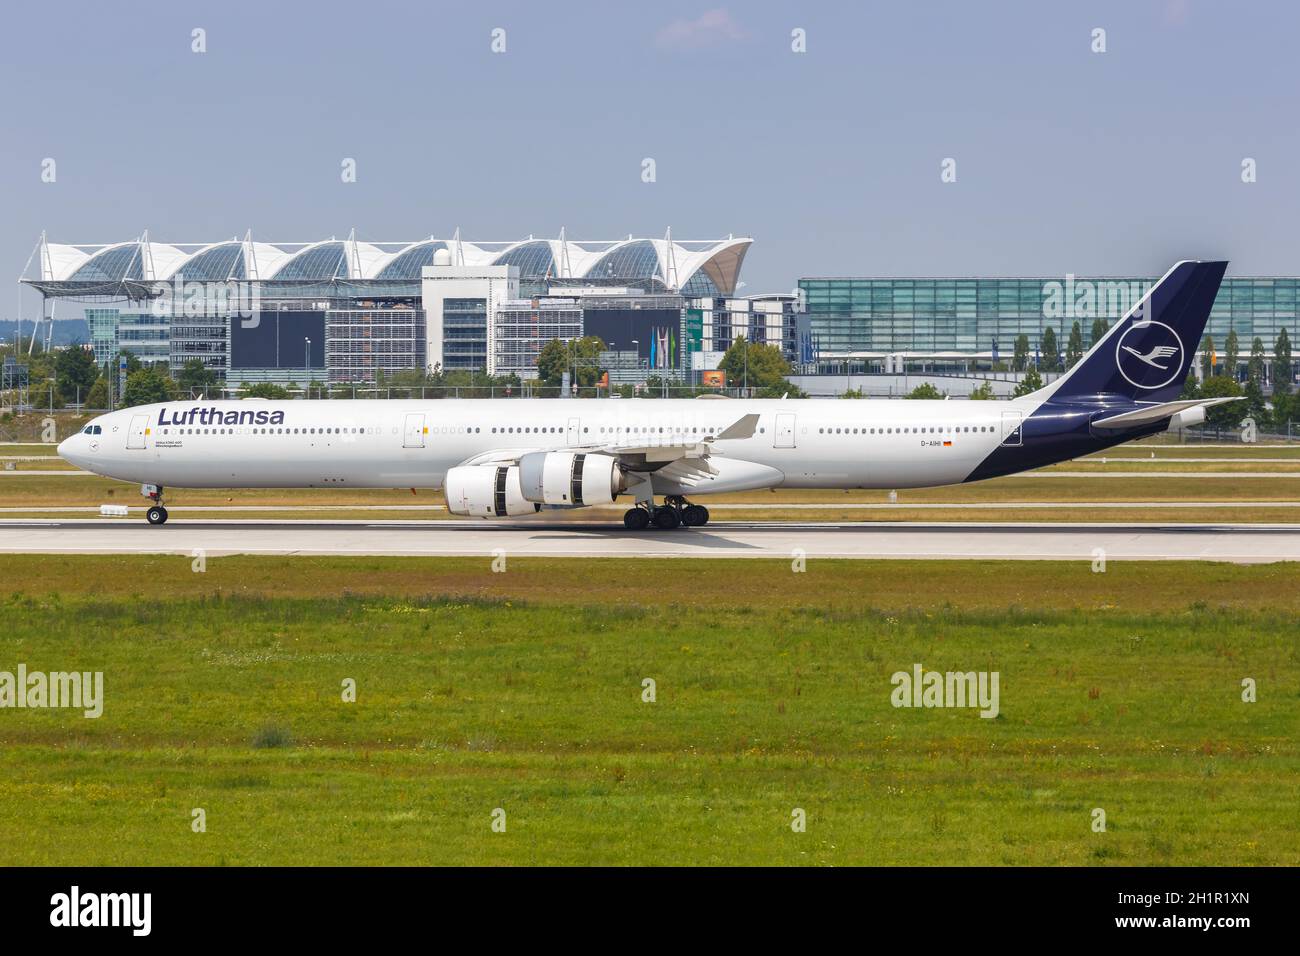 Munich, Germany - July 20, 2019: Lufthansa Airbus A340-600 airplane at Munich Airport (MUC) in Germany. Airbus is a European aircraft manufacturer bas Stock Photo